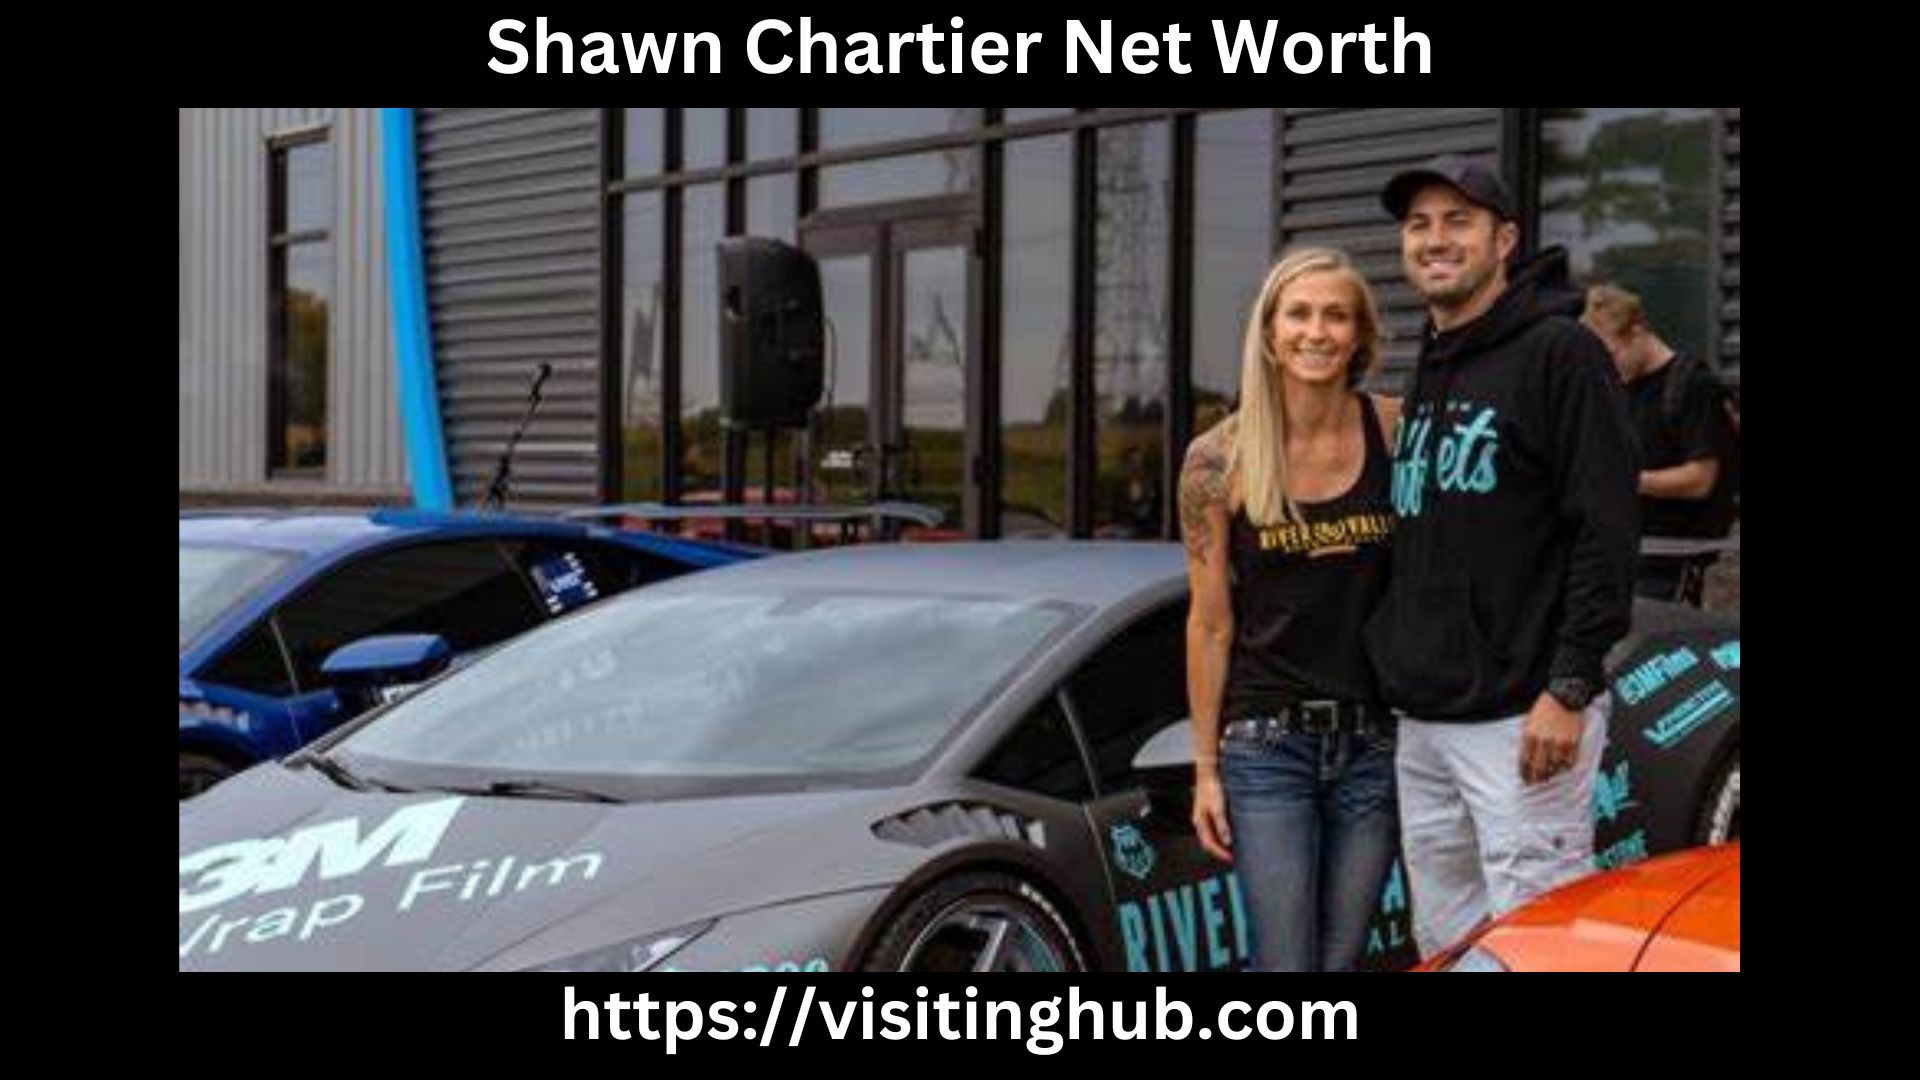 Shawn Chartier Net Worth